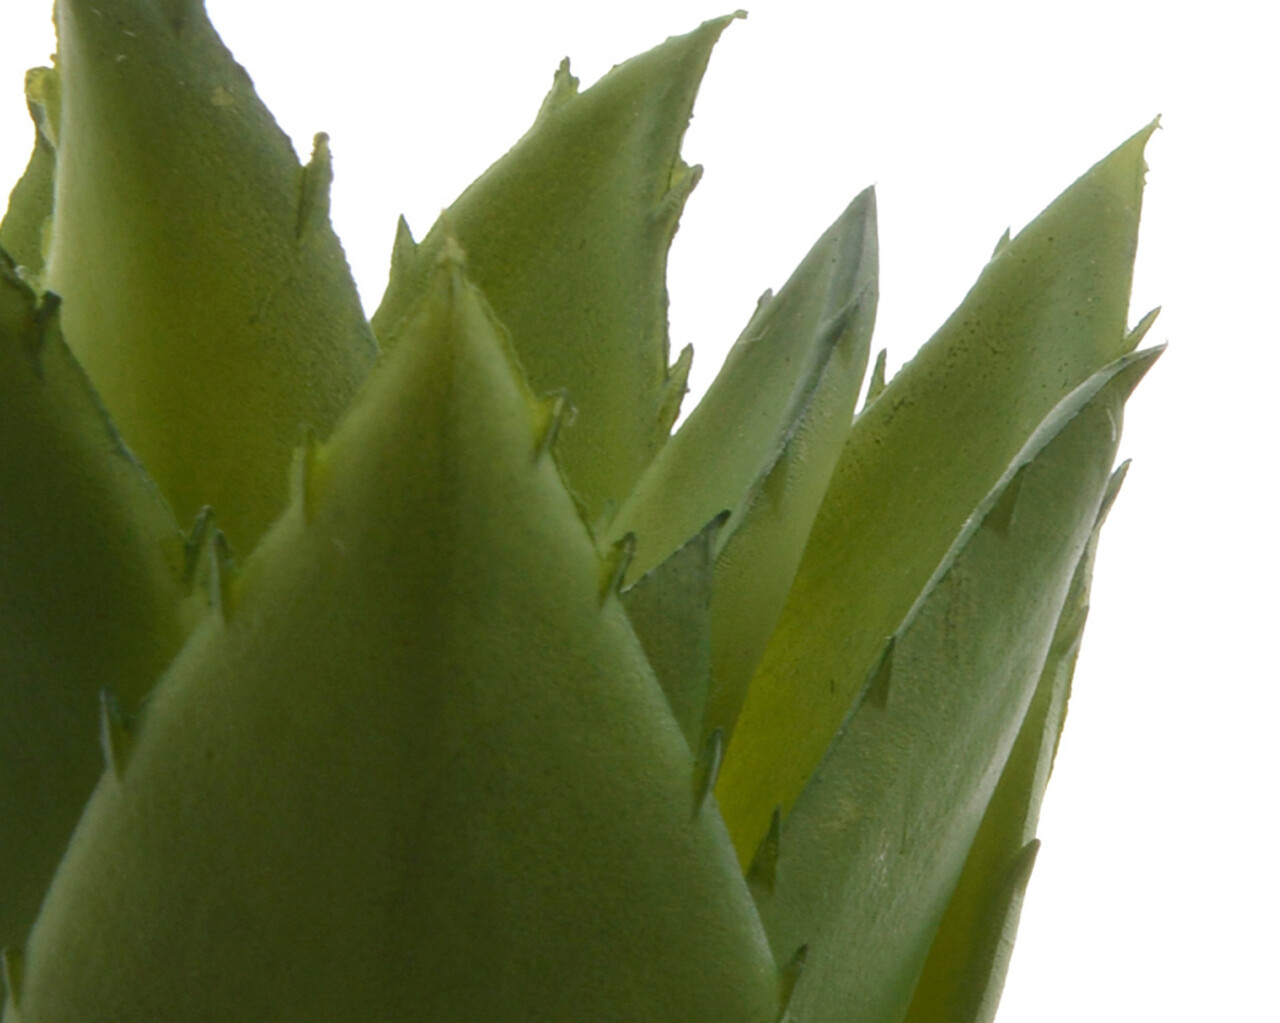 Floare artificiala in ghiveci Succulent v1, Decoris, 5 x 5 x 12 cm, plastic/iuta, verde